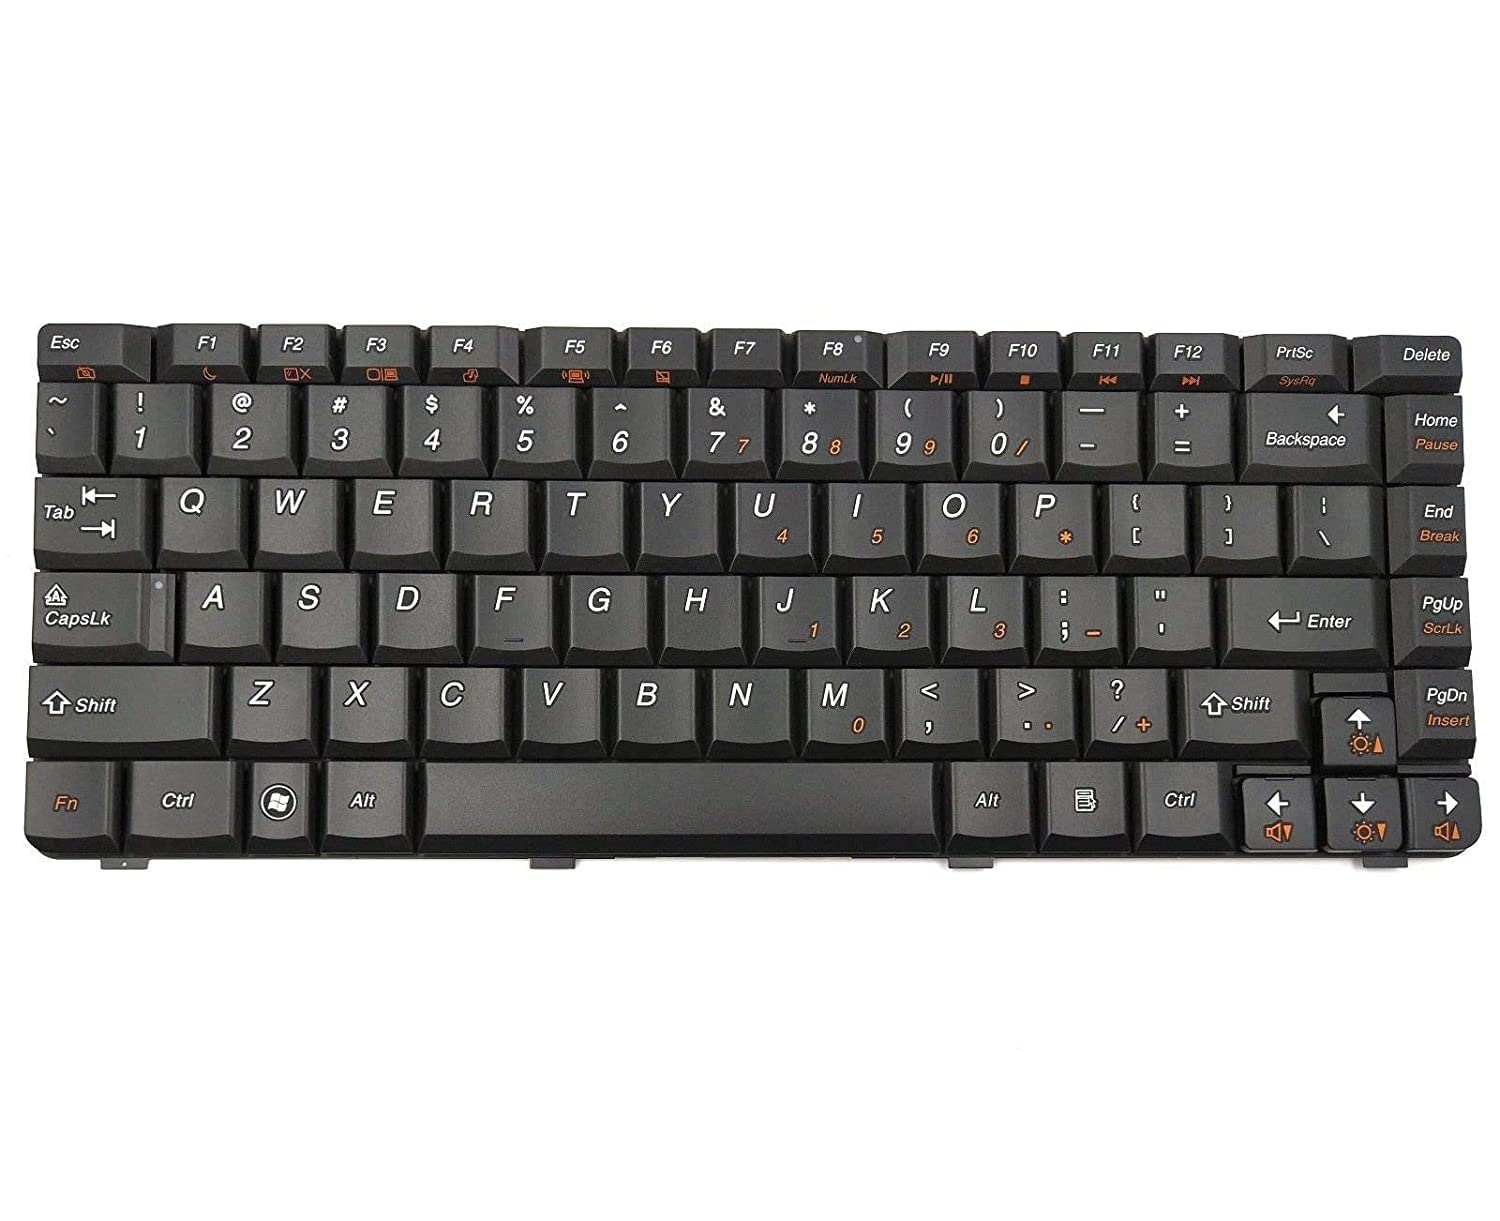 Wistar Laptop Keyboard Compatible for Laptop Keyboard for Lenovo G460 G460 G460A G460AL G460E G465 9Z. N5JSN. 00S 20-009750 V-100920FS1 25-009750 V-100920FS1 25-011427 NSK-B30SN 9Z.N5JSN.001 N2L-US